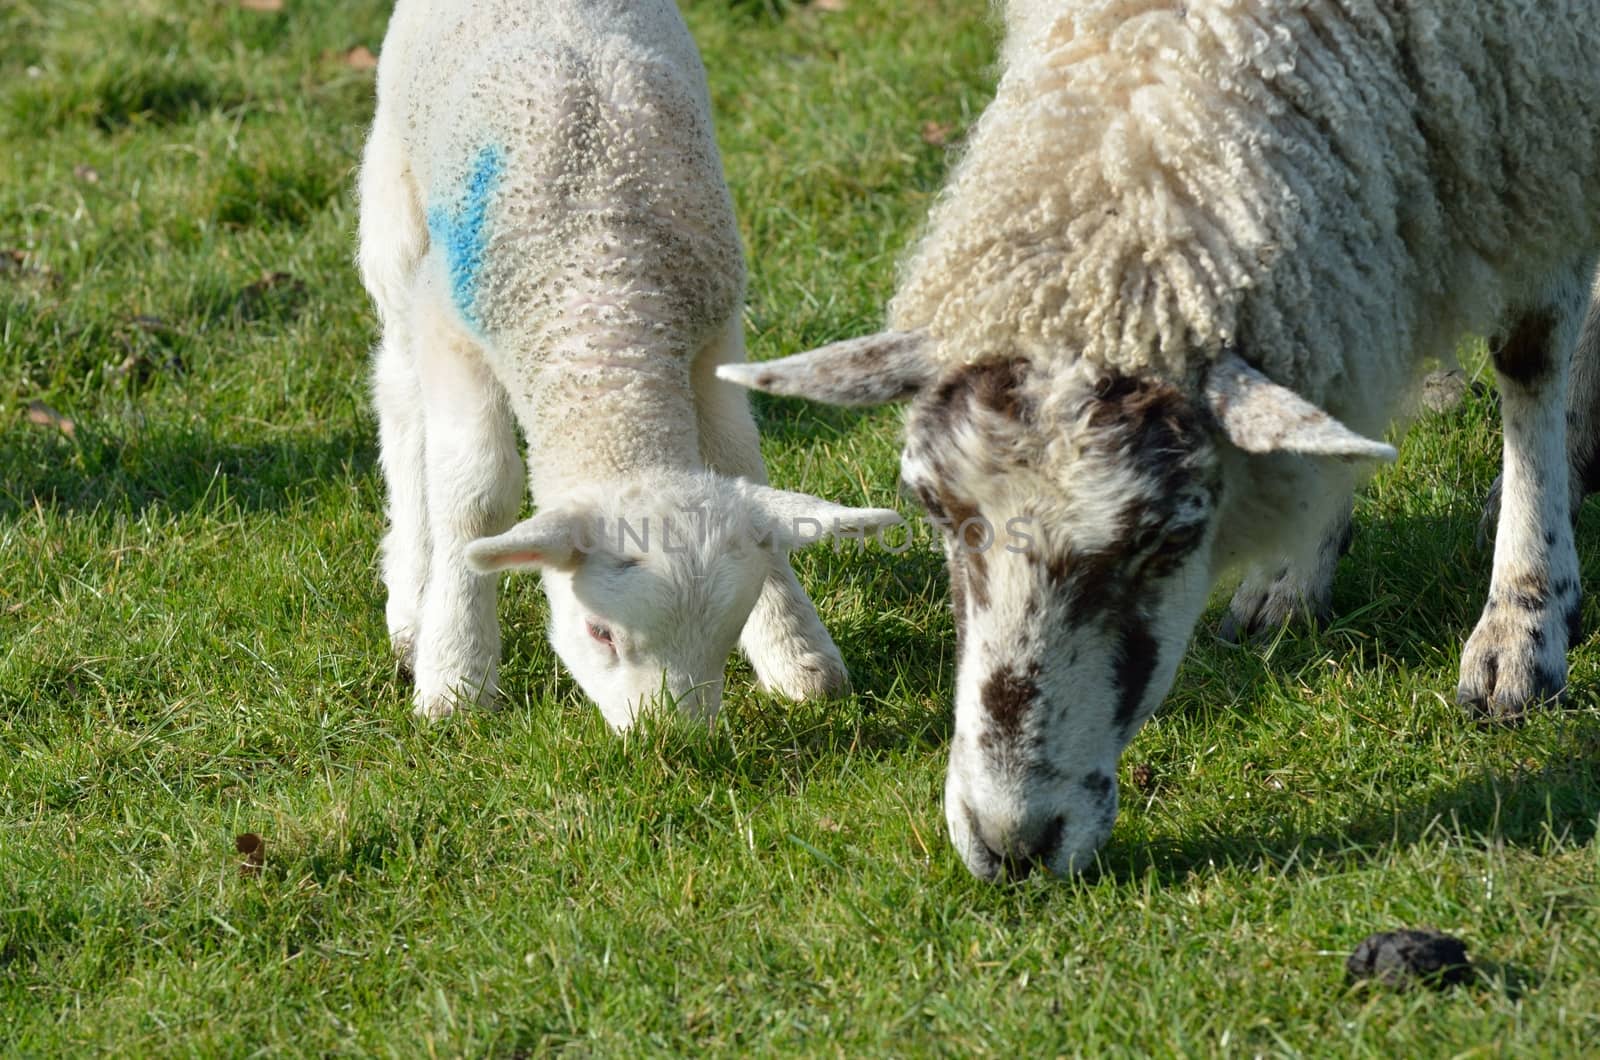 Lamb and ewe feeding by pauws99